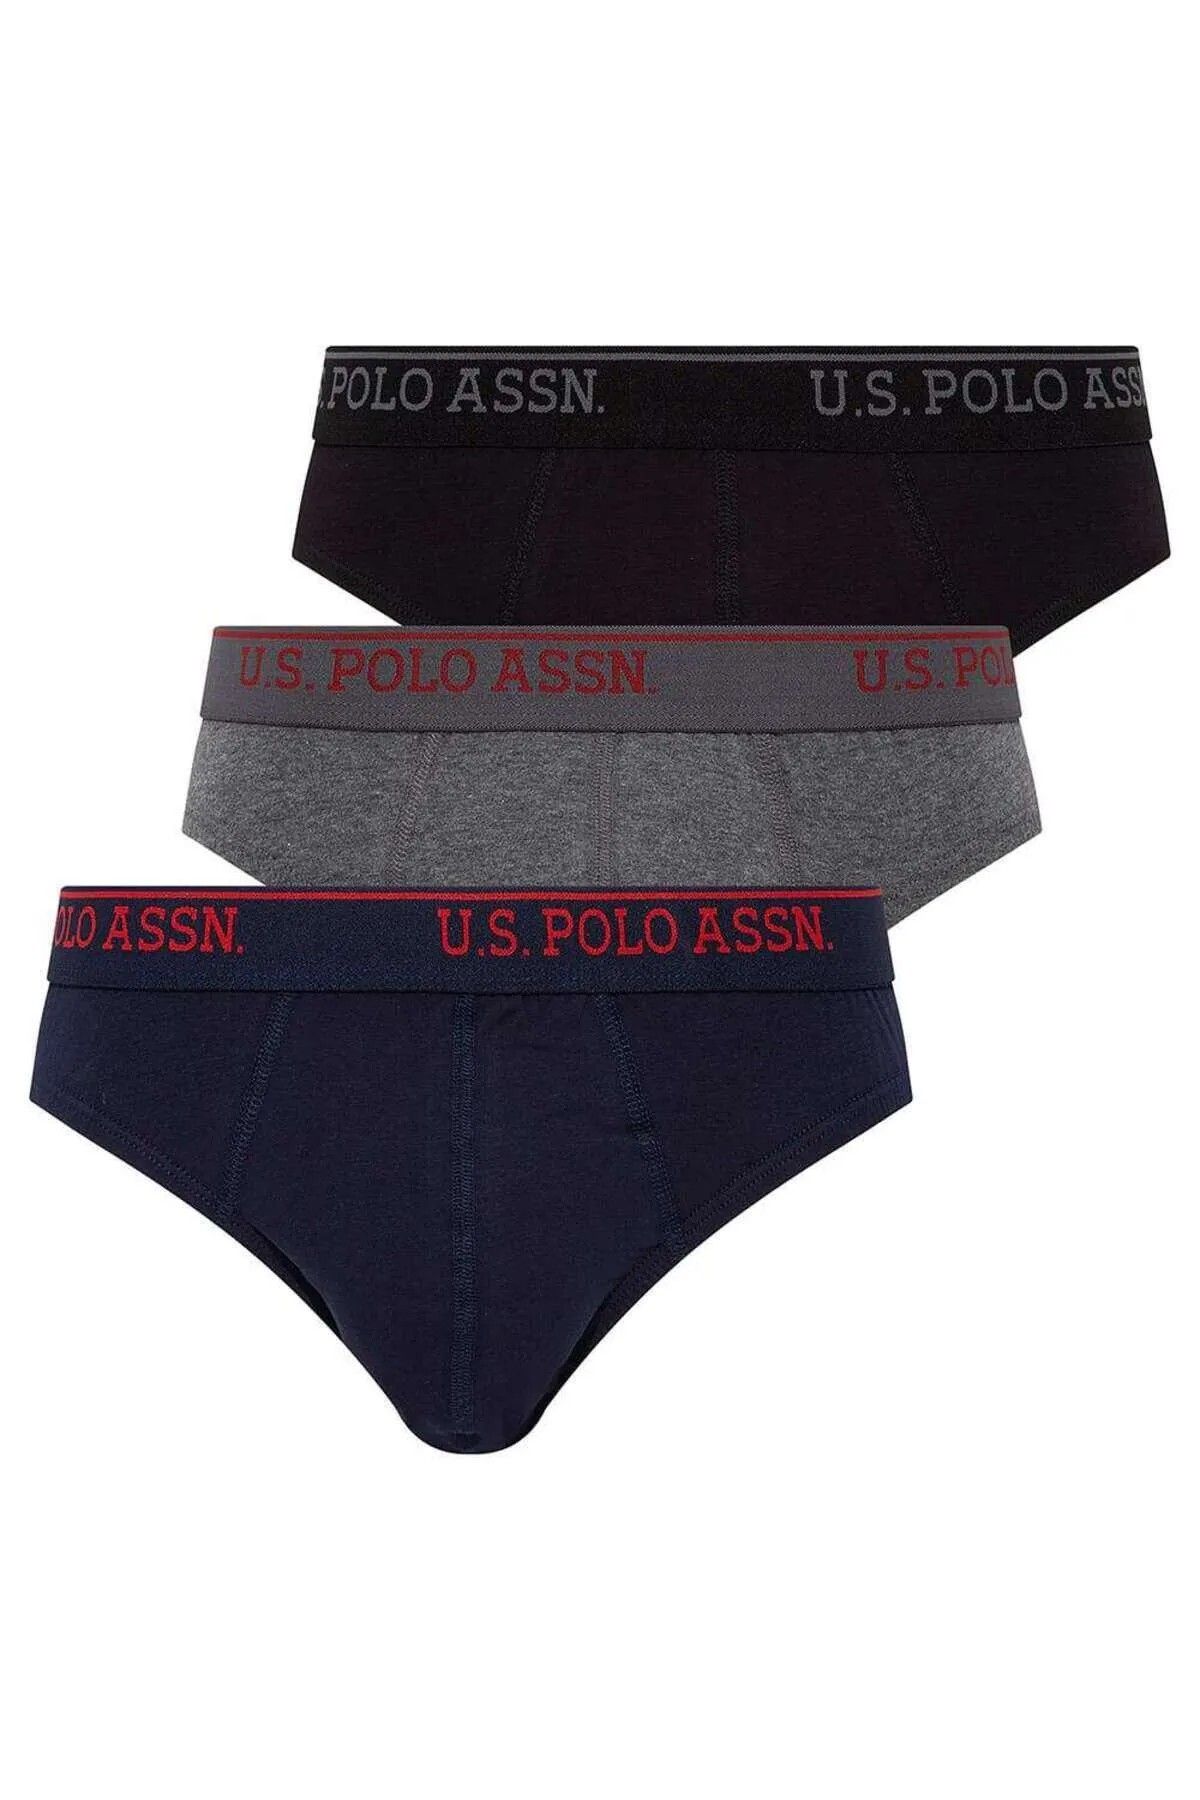 U.S. Polo Assn. U.S. Polo Assn. Erkek 3'lü Slip Siyah - Antrasit - Lacivert